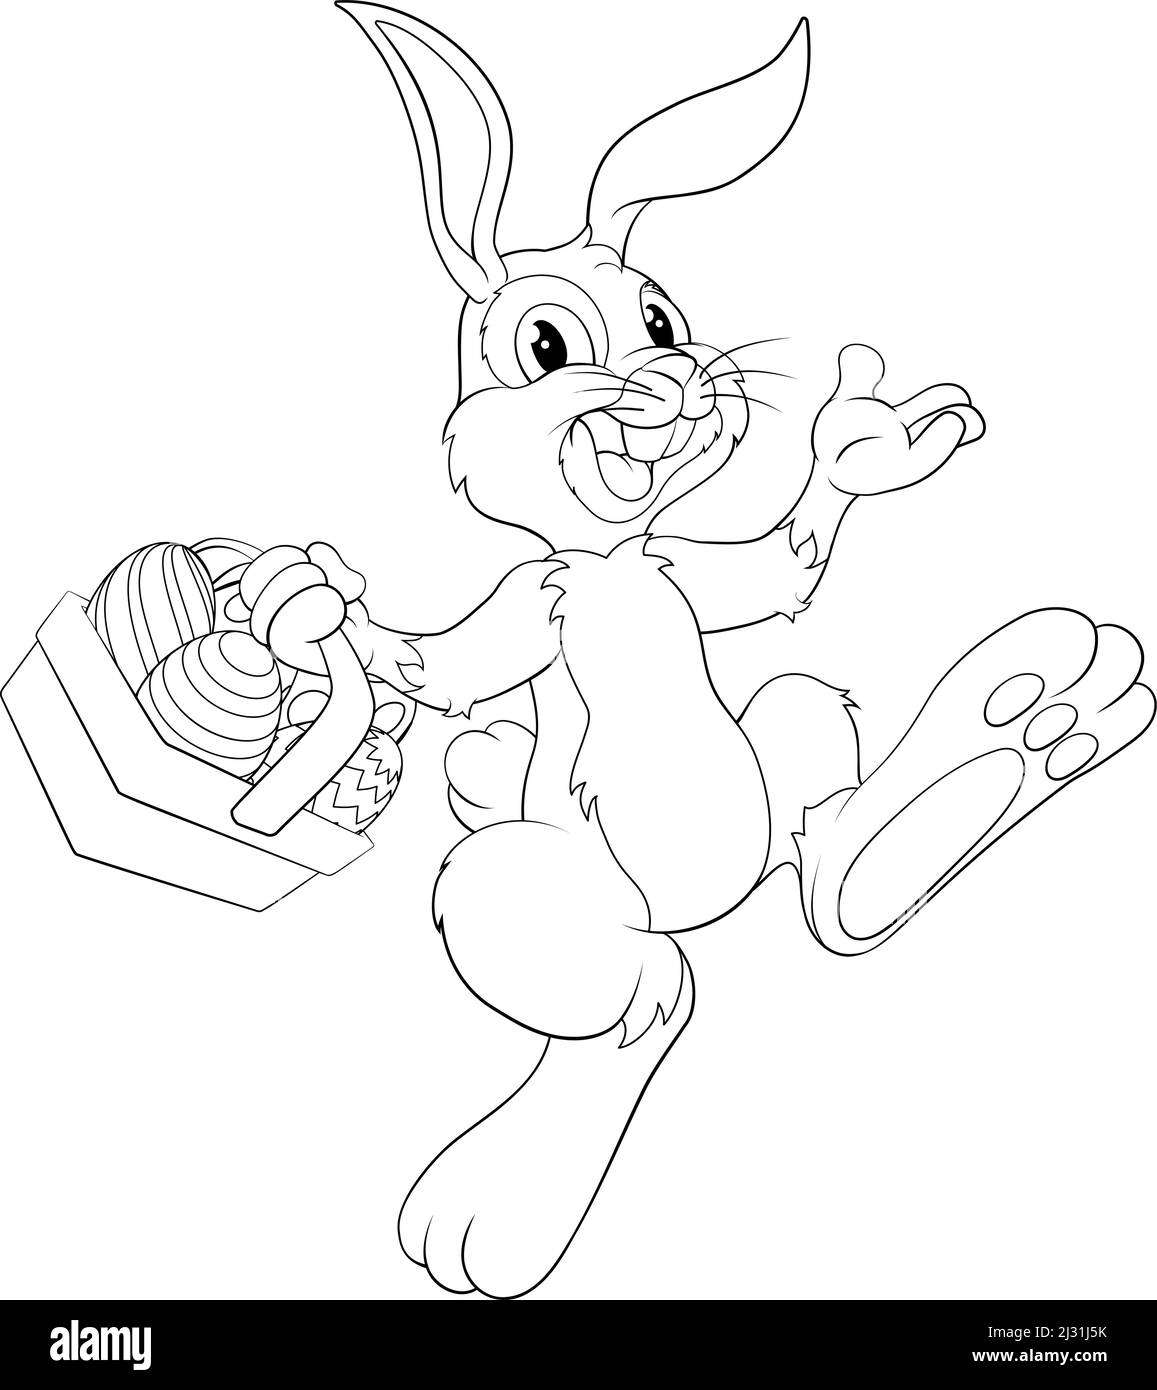 Easter Bunny Cartoon Rabbit With Eggs Basket Stock Vector